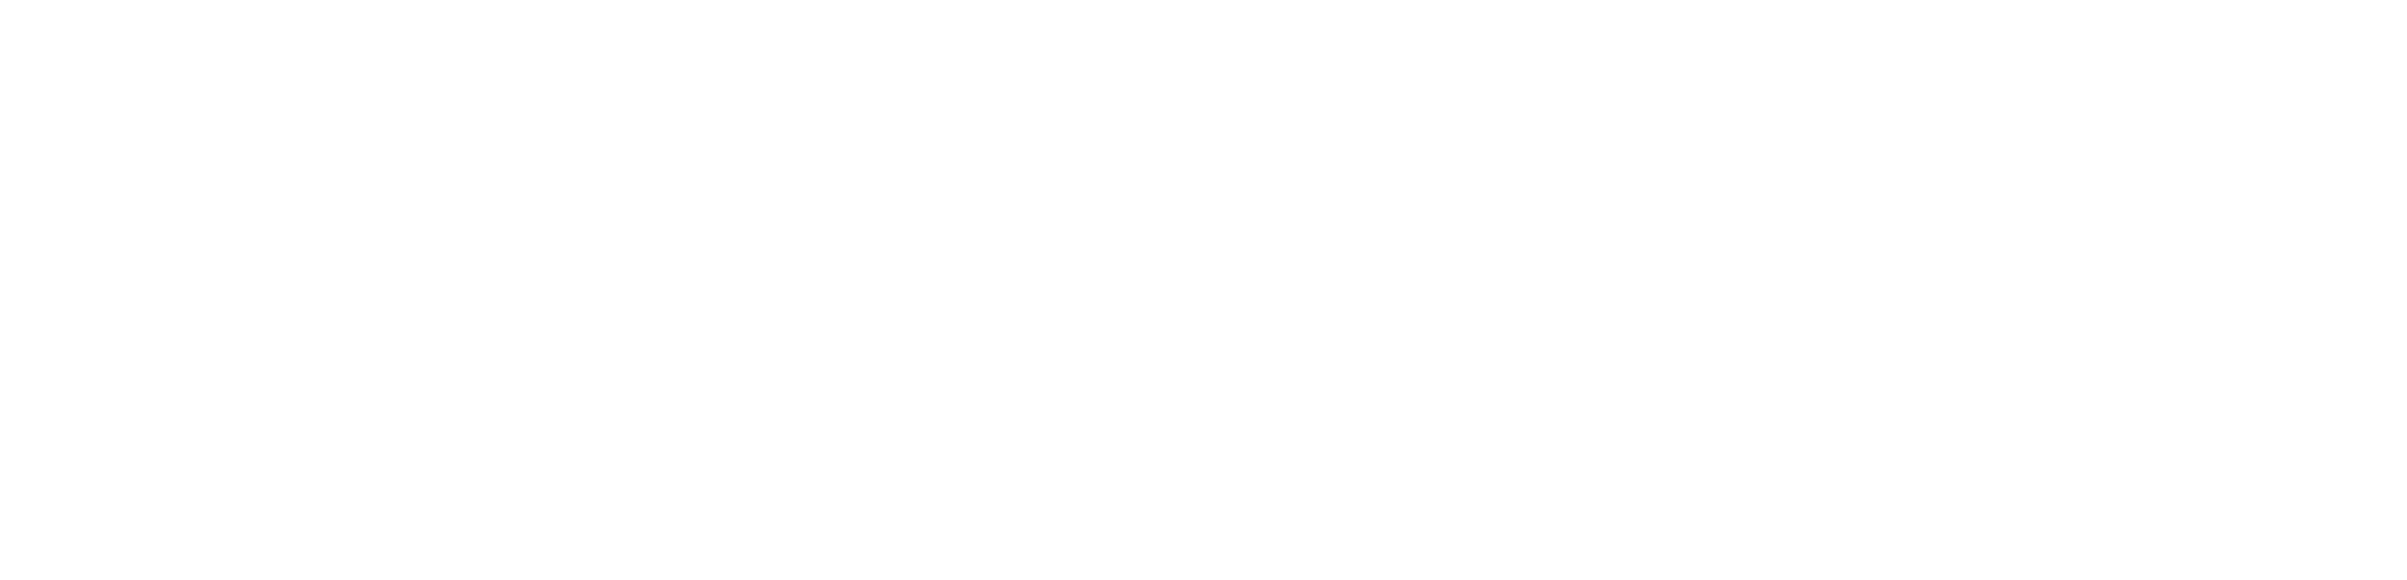 Just Chaos Studios